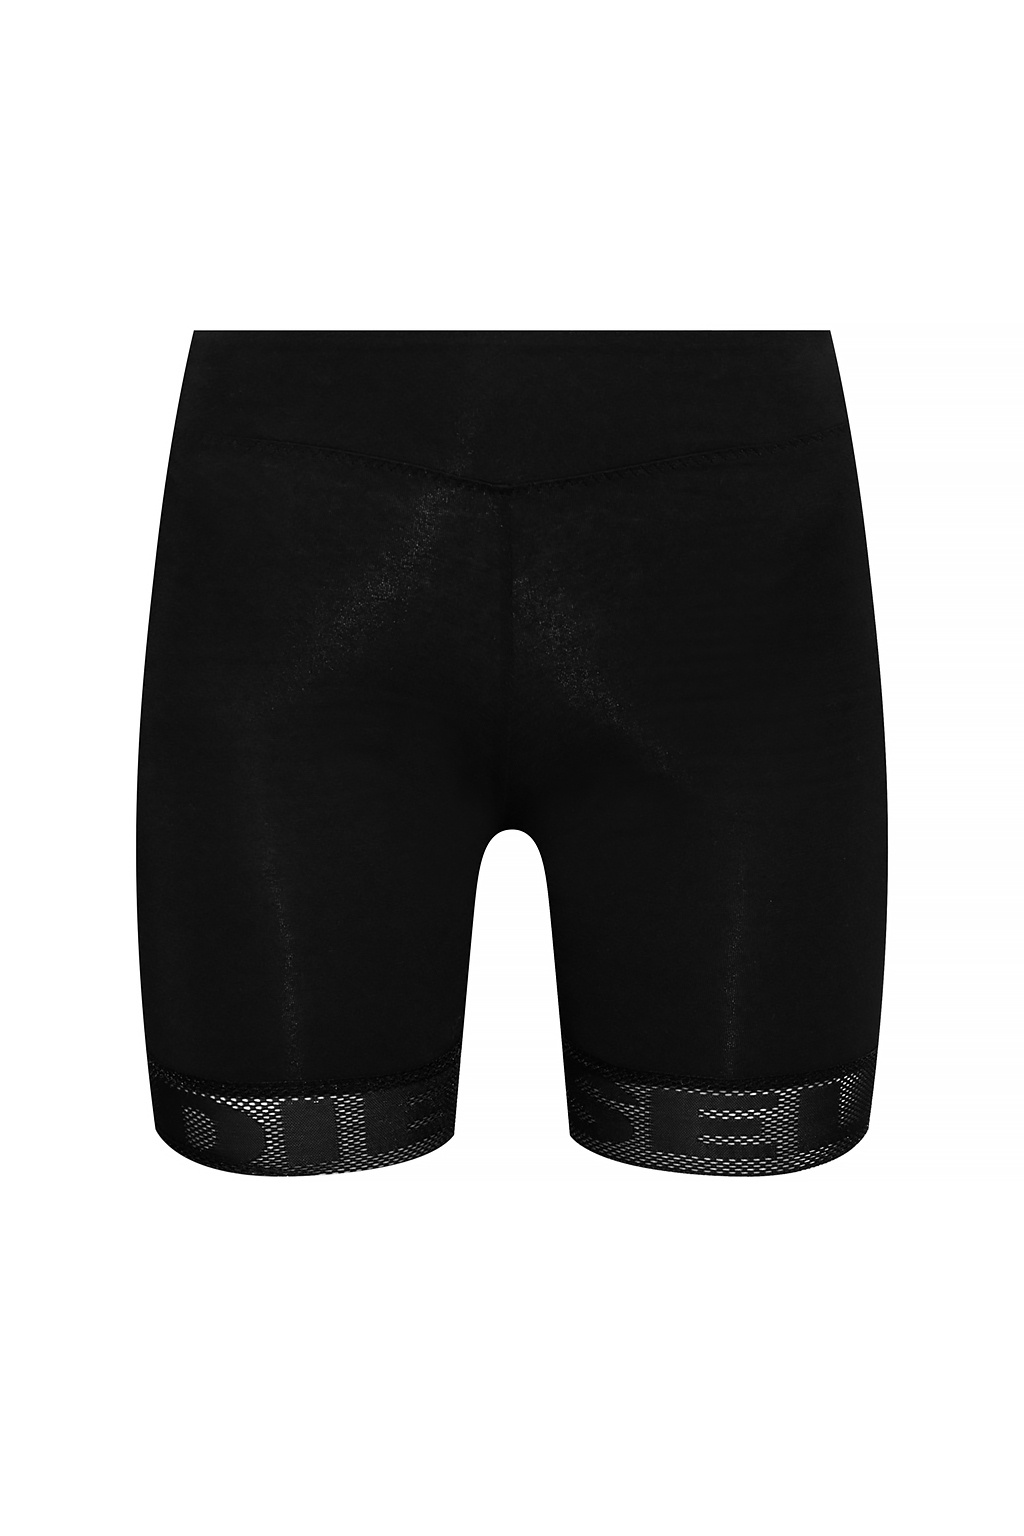 AMIRI floral-print silk shorts - Black Short leggings with logo